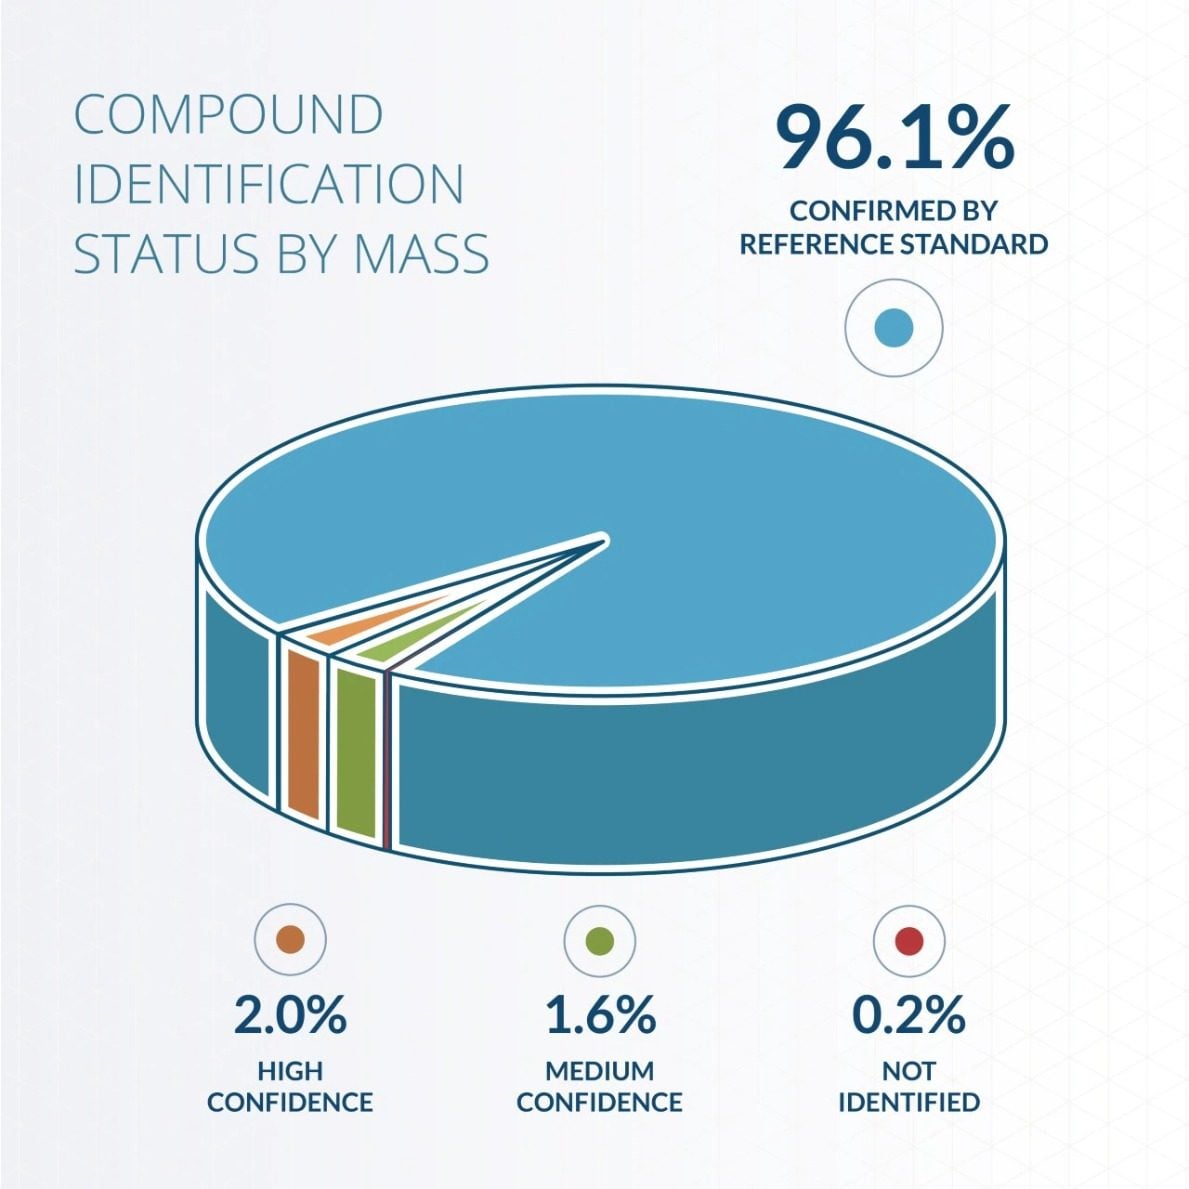 Compound identification status by mass